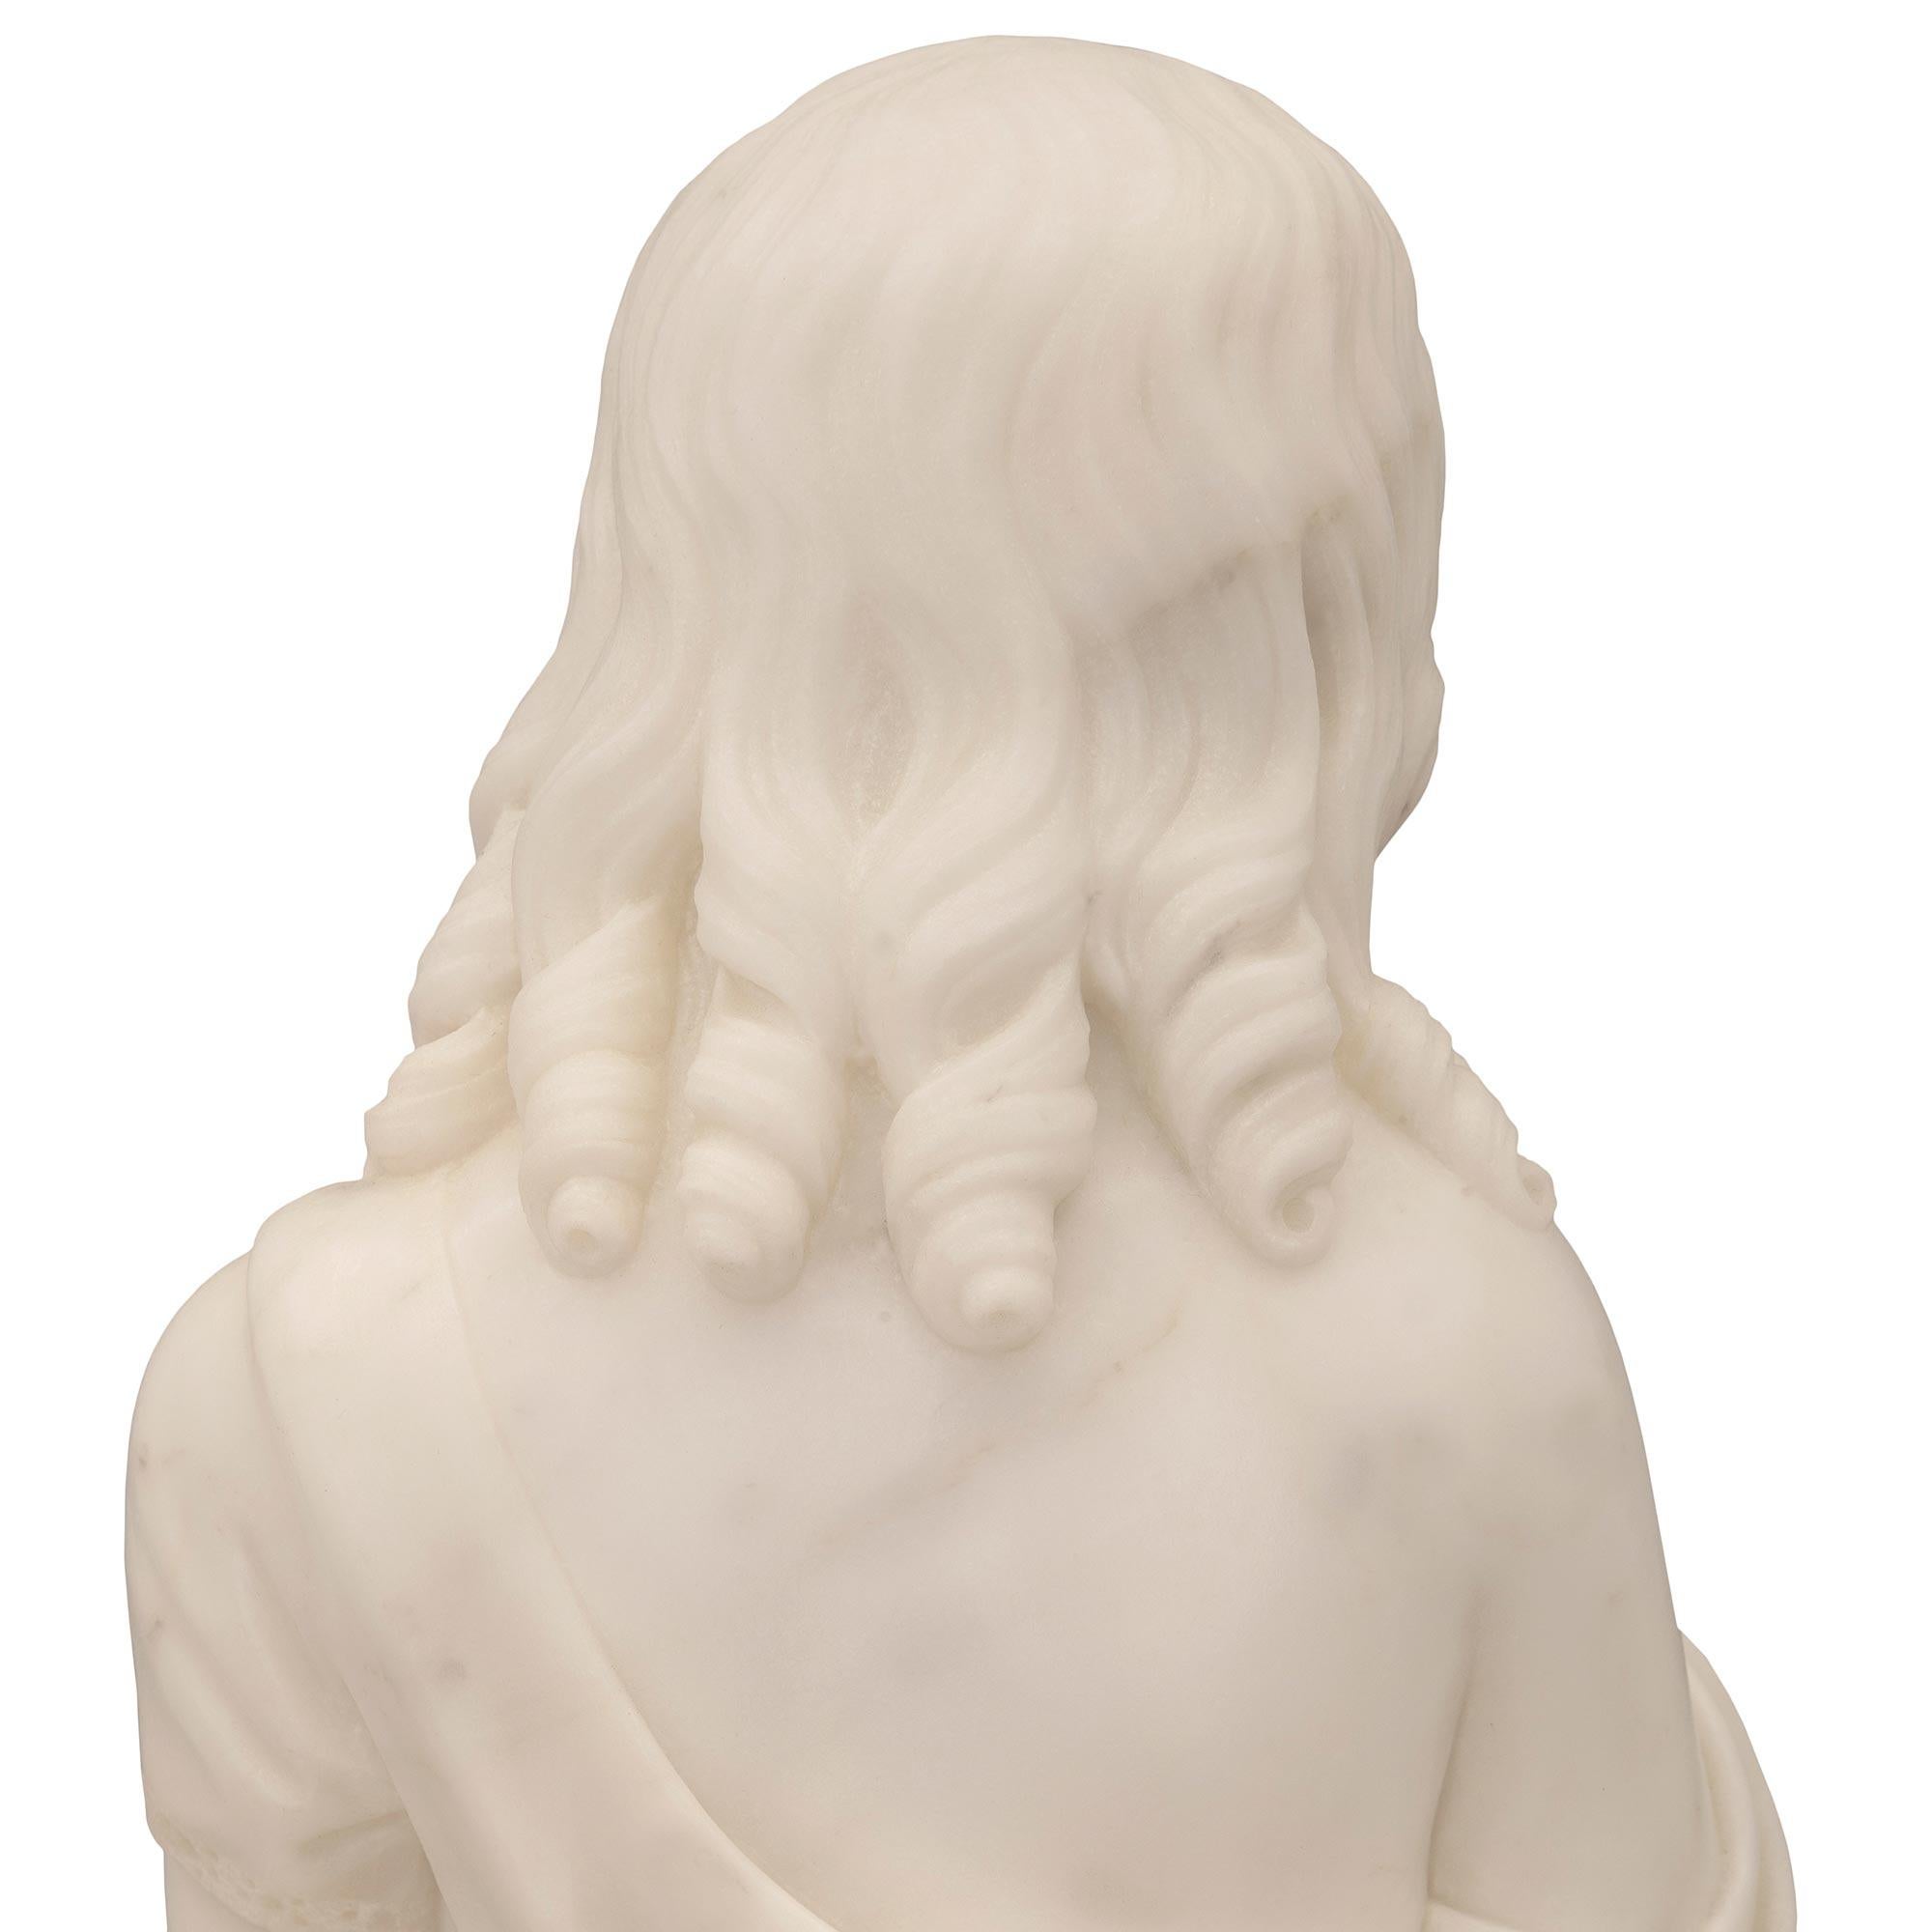 Italian 19th Century White Carrara Marble Statue For Sale 5